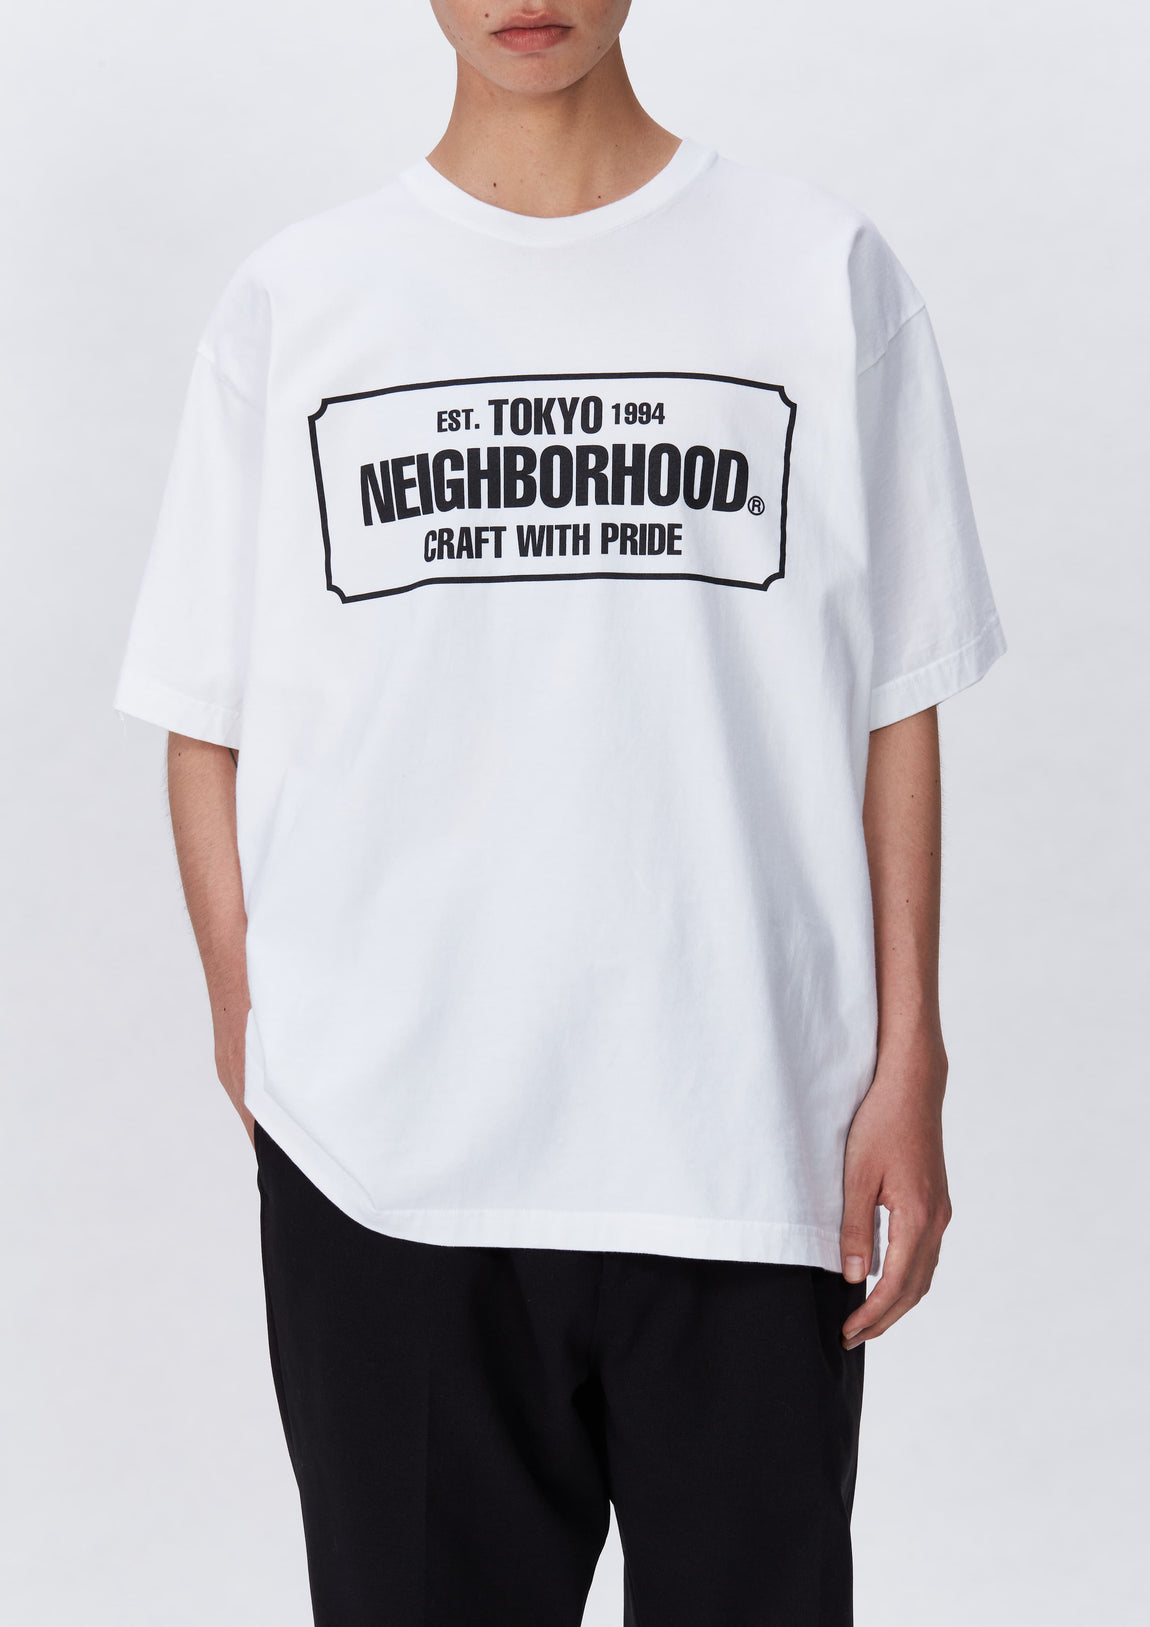 NEIGHBORHOOD NH TEE-1 SS . CO Tシャツ Lサイズ 値引きする 3210円